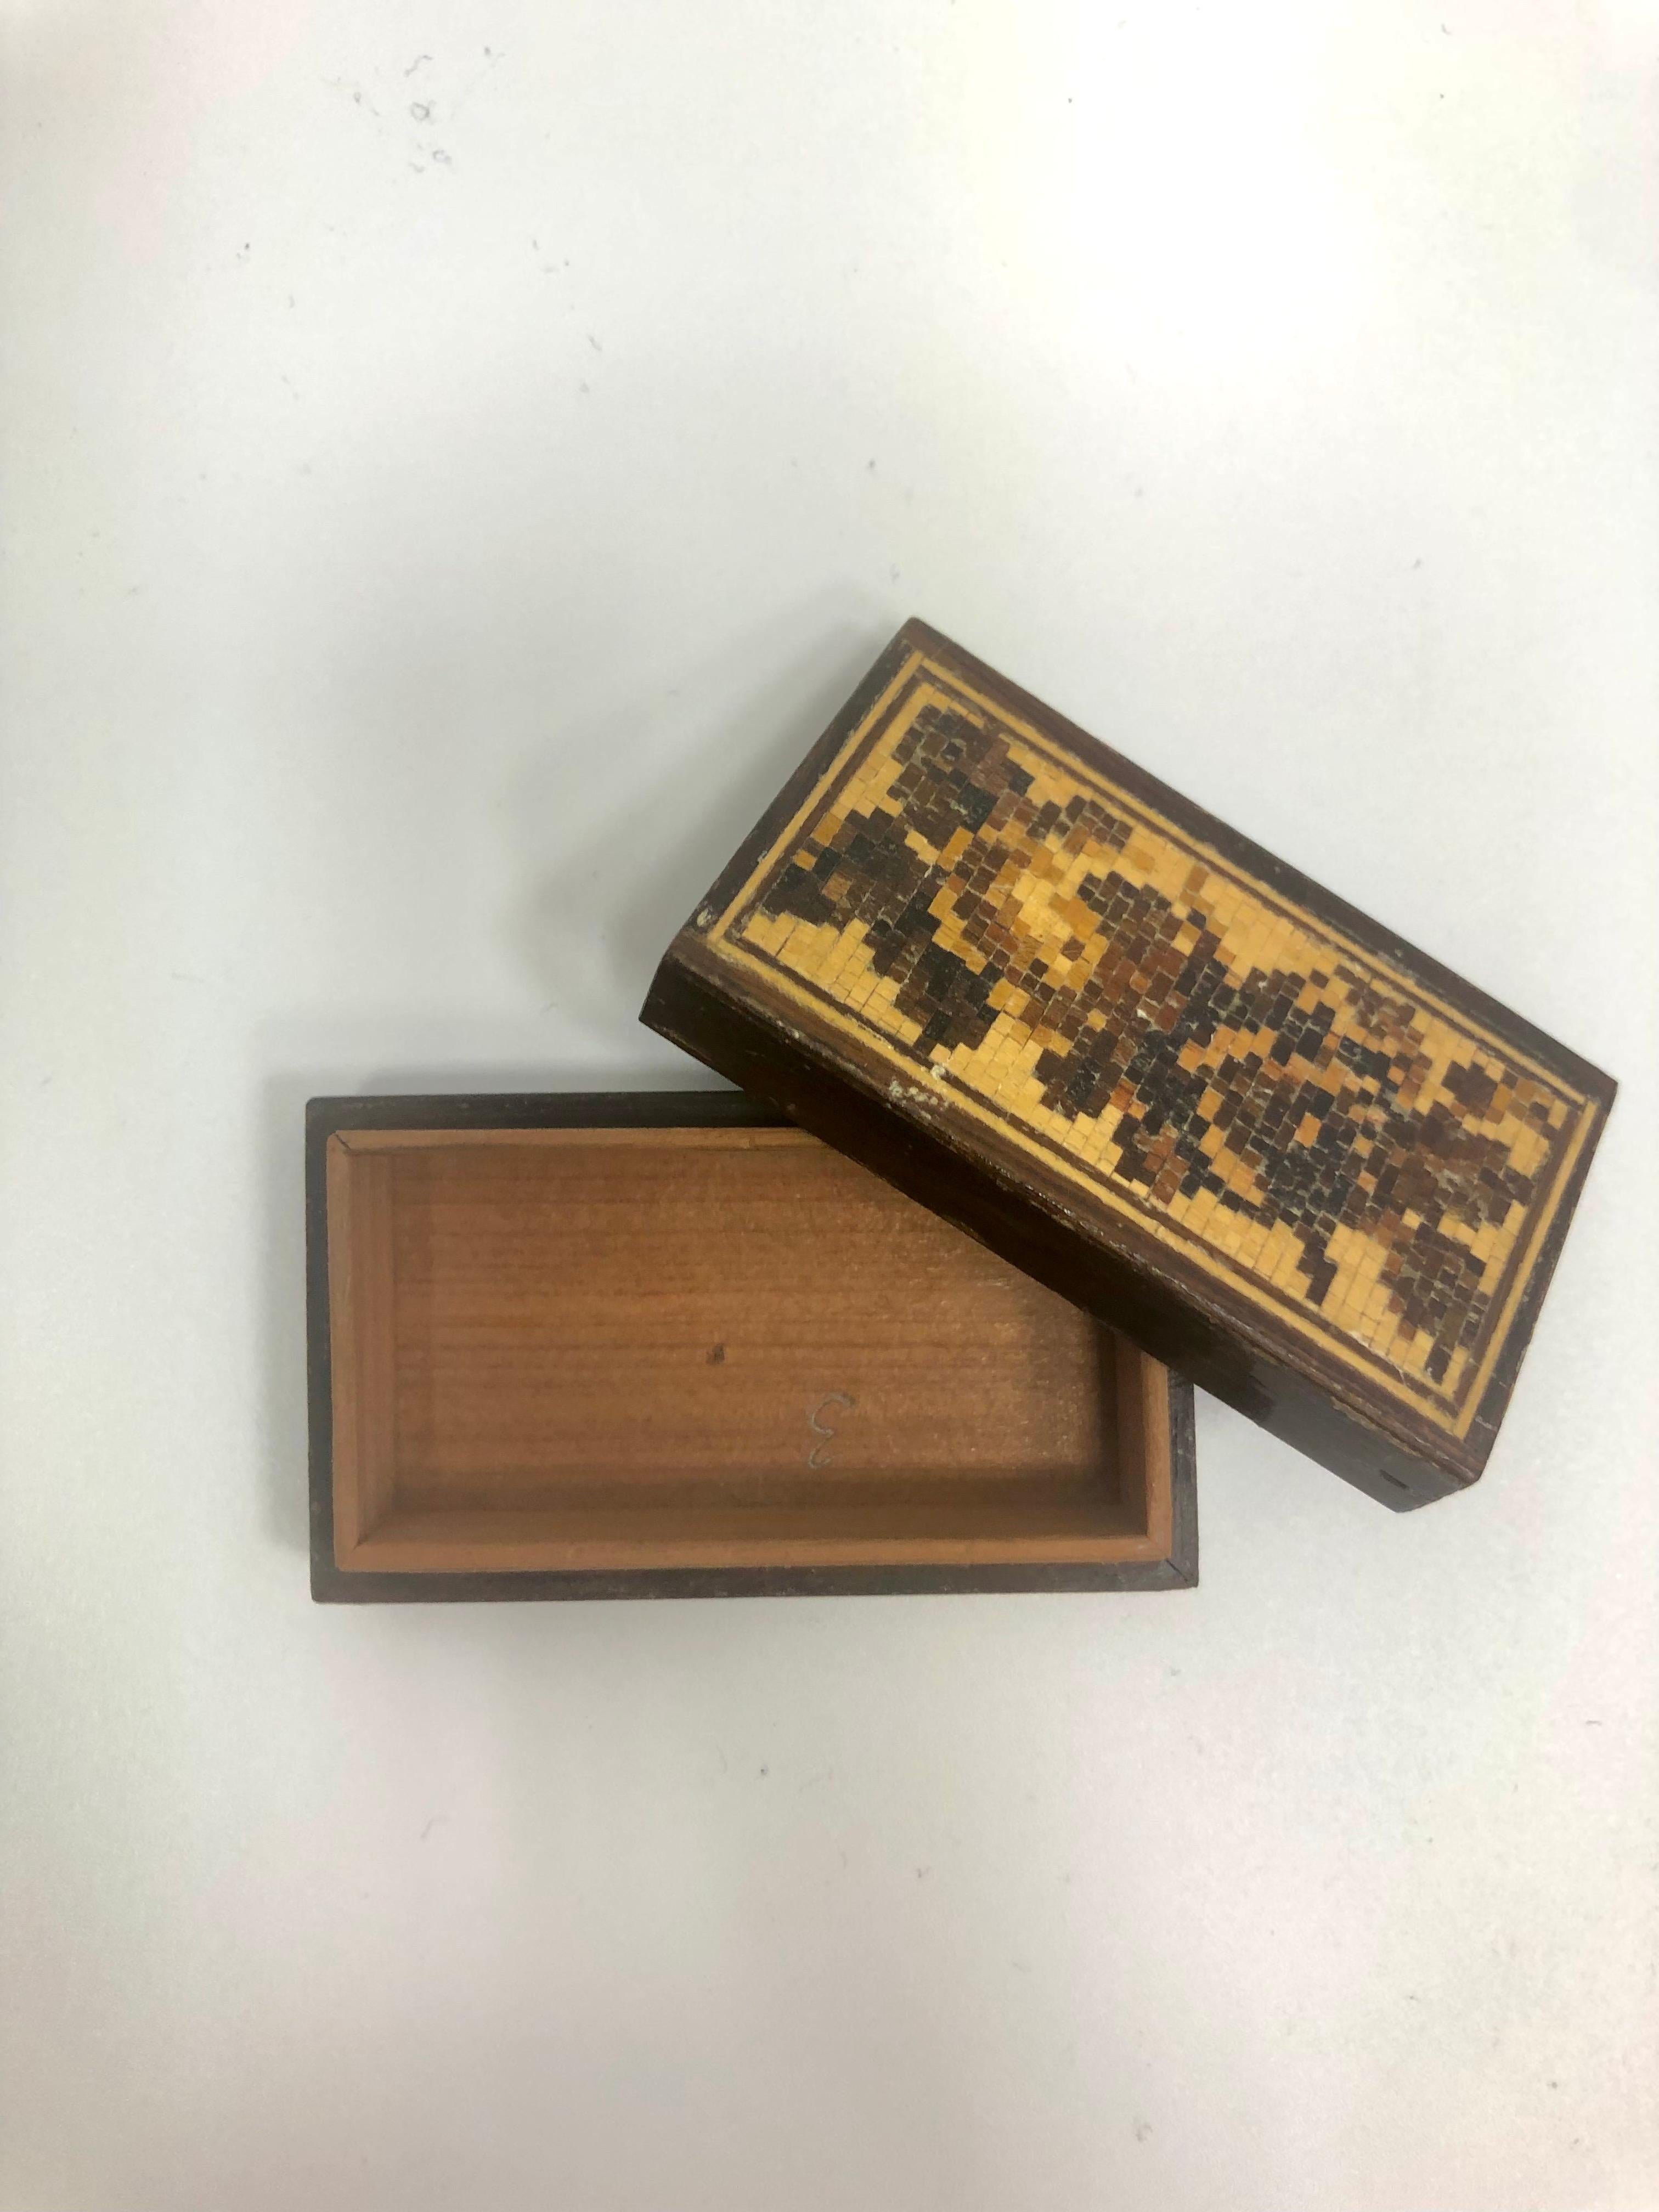 Mosaic Tunbridge Wooden Trinket Box England 1870 For Sale